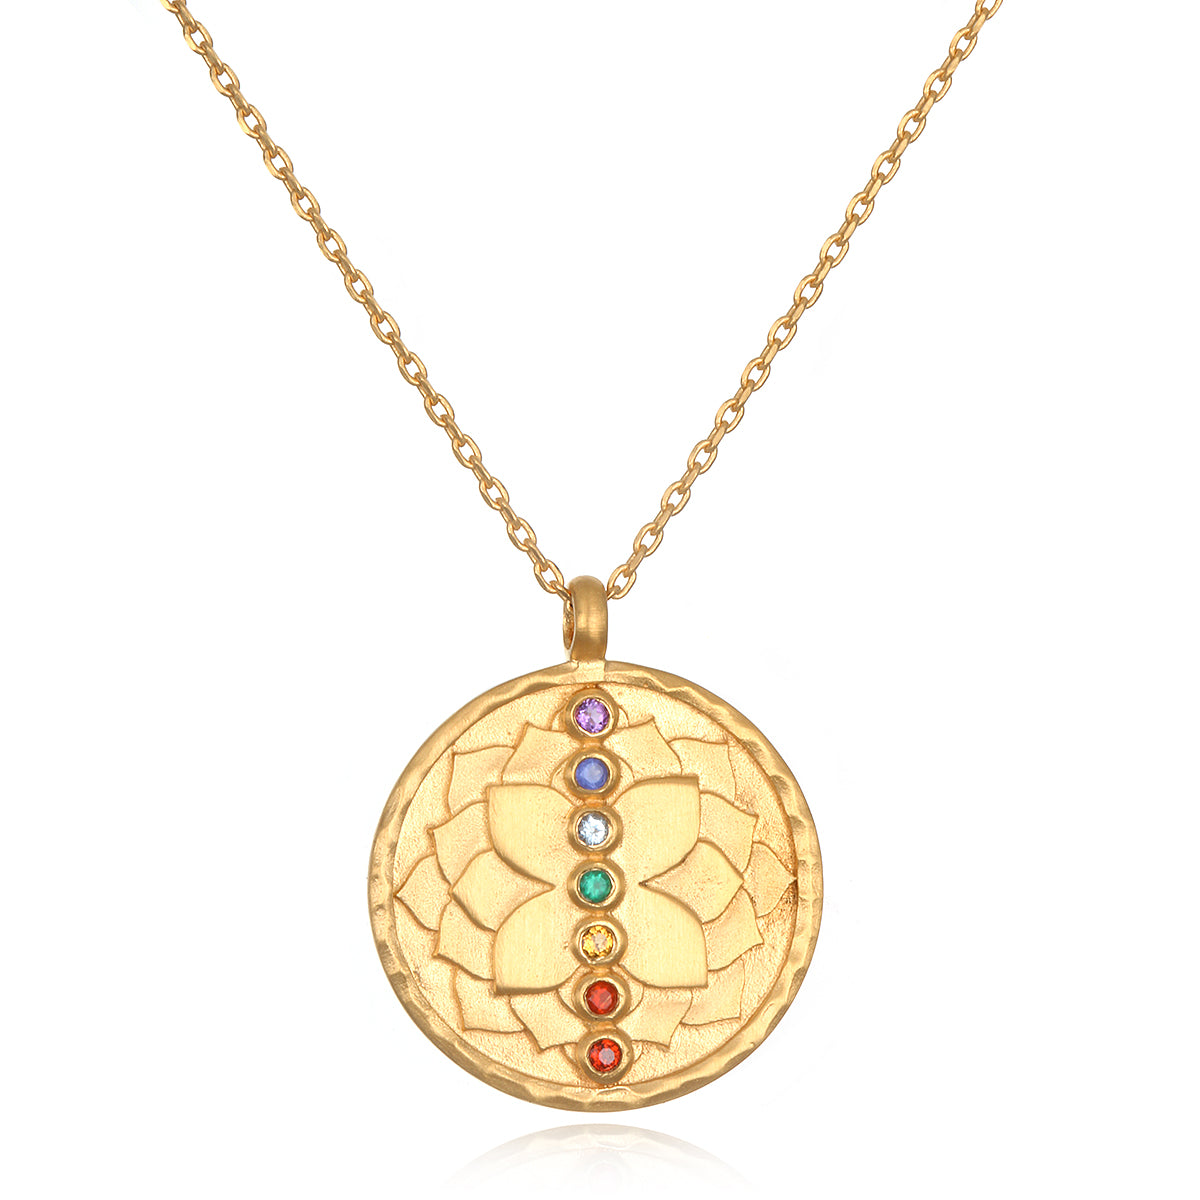 Rain 7 Chakra Heart Gold Chain Necklace